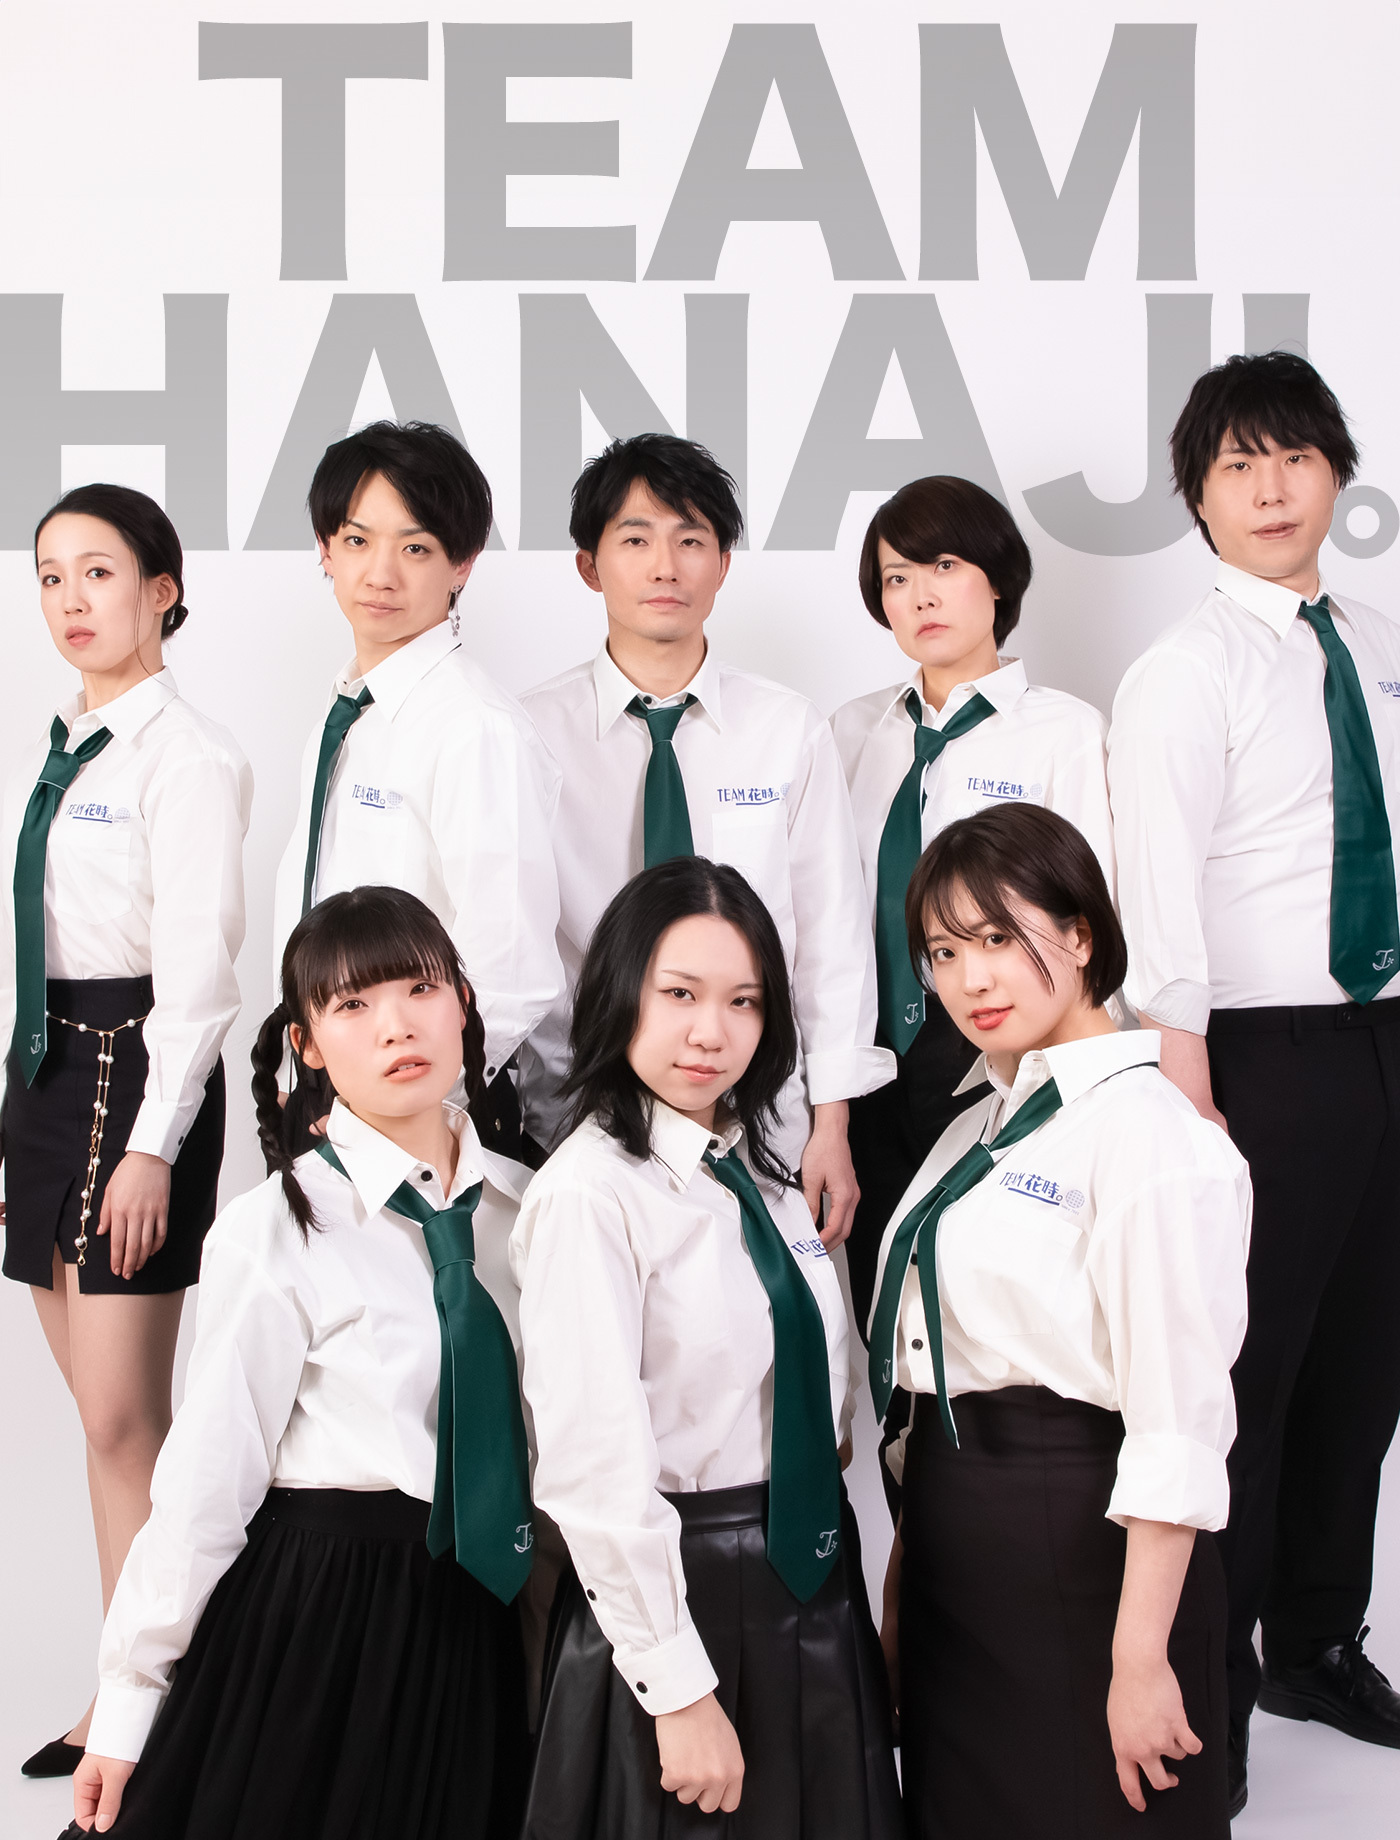 hanaji-member-bn2-2.jpg